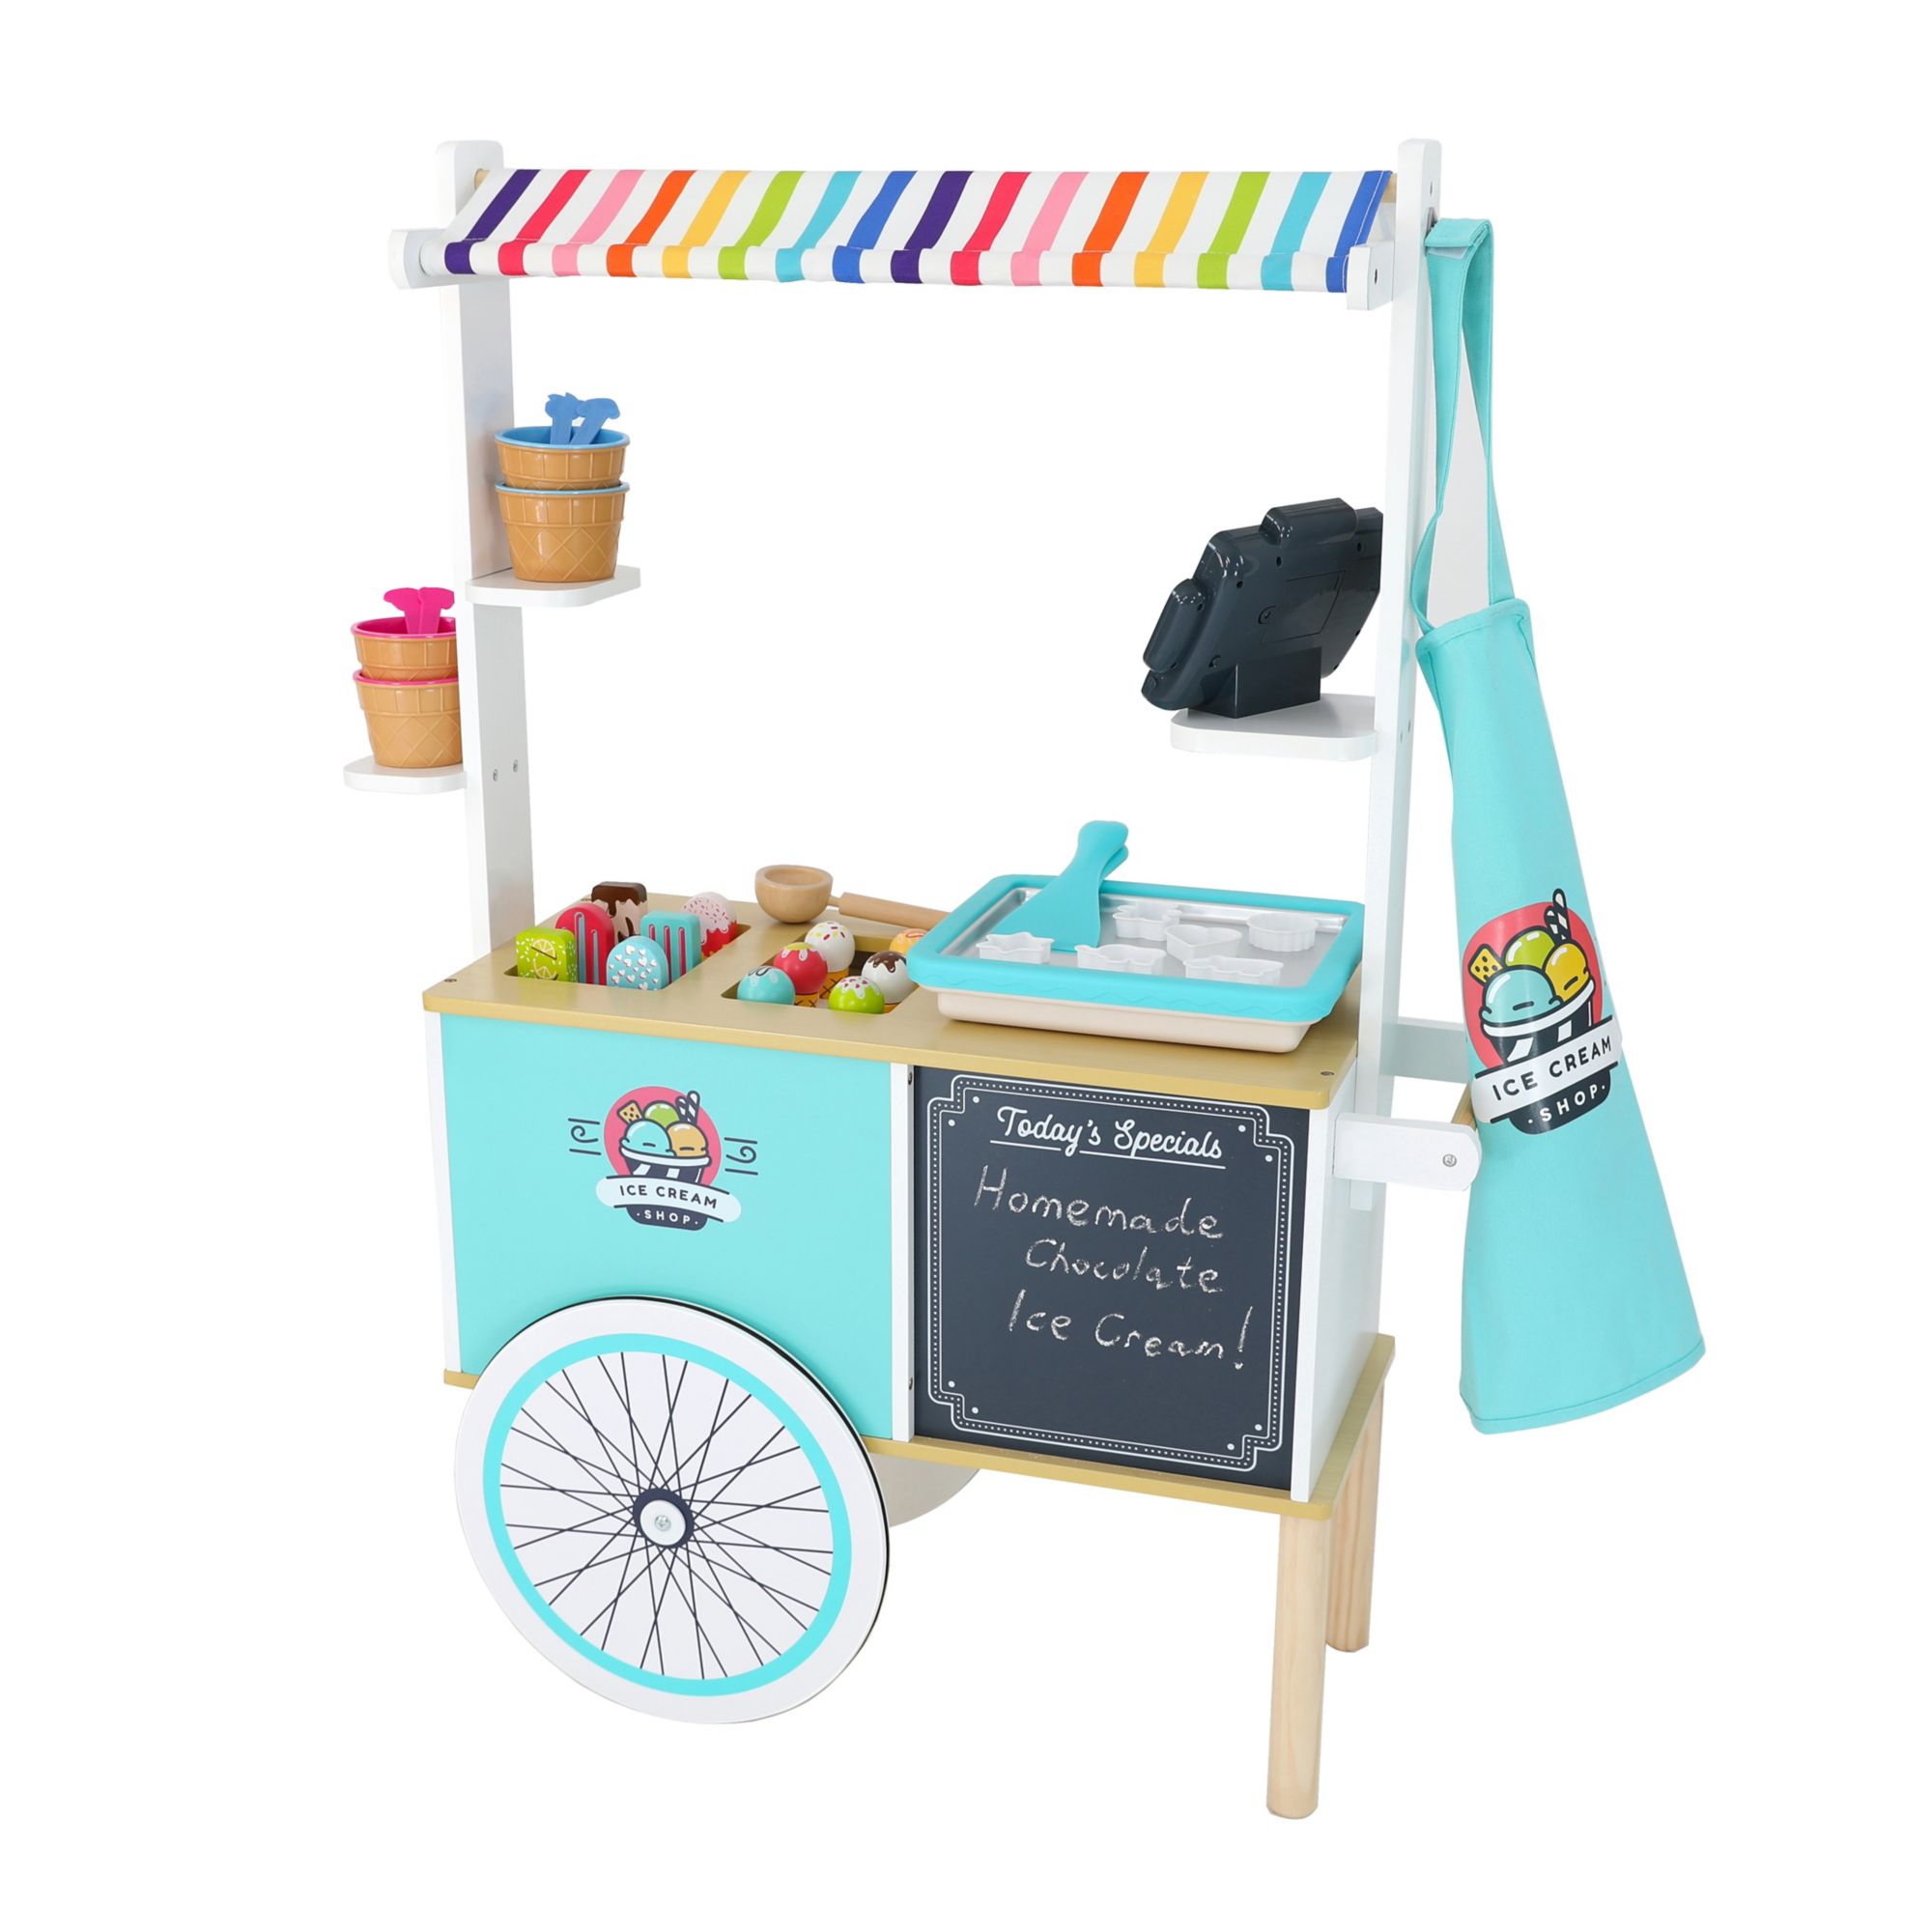 Ice Cream Maker - Shop